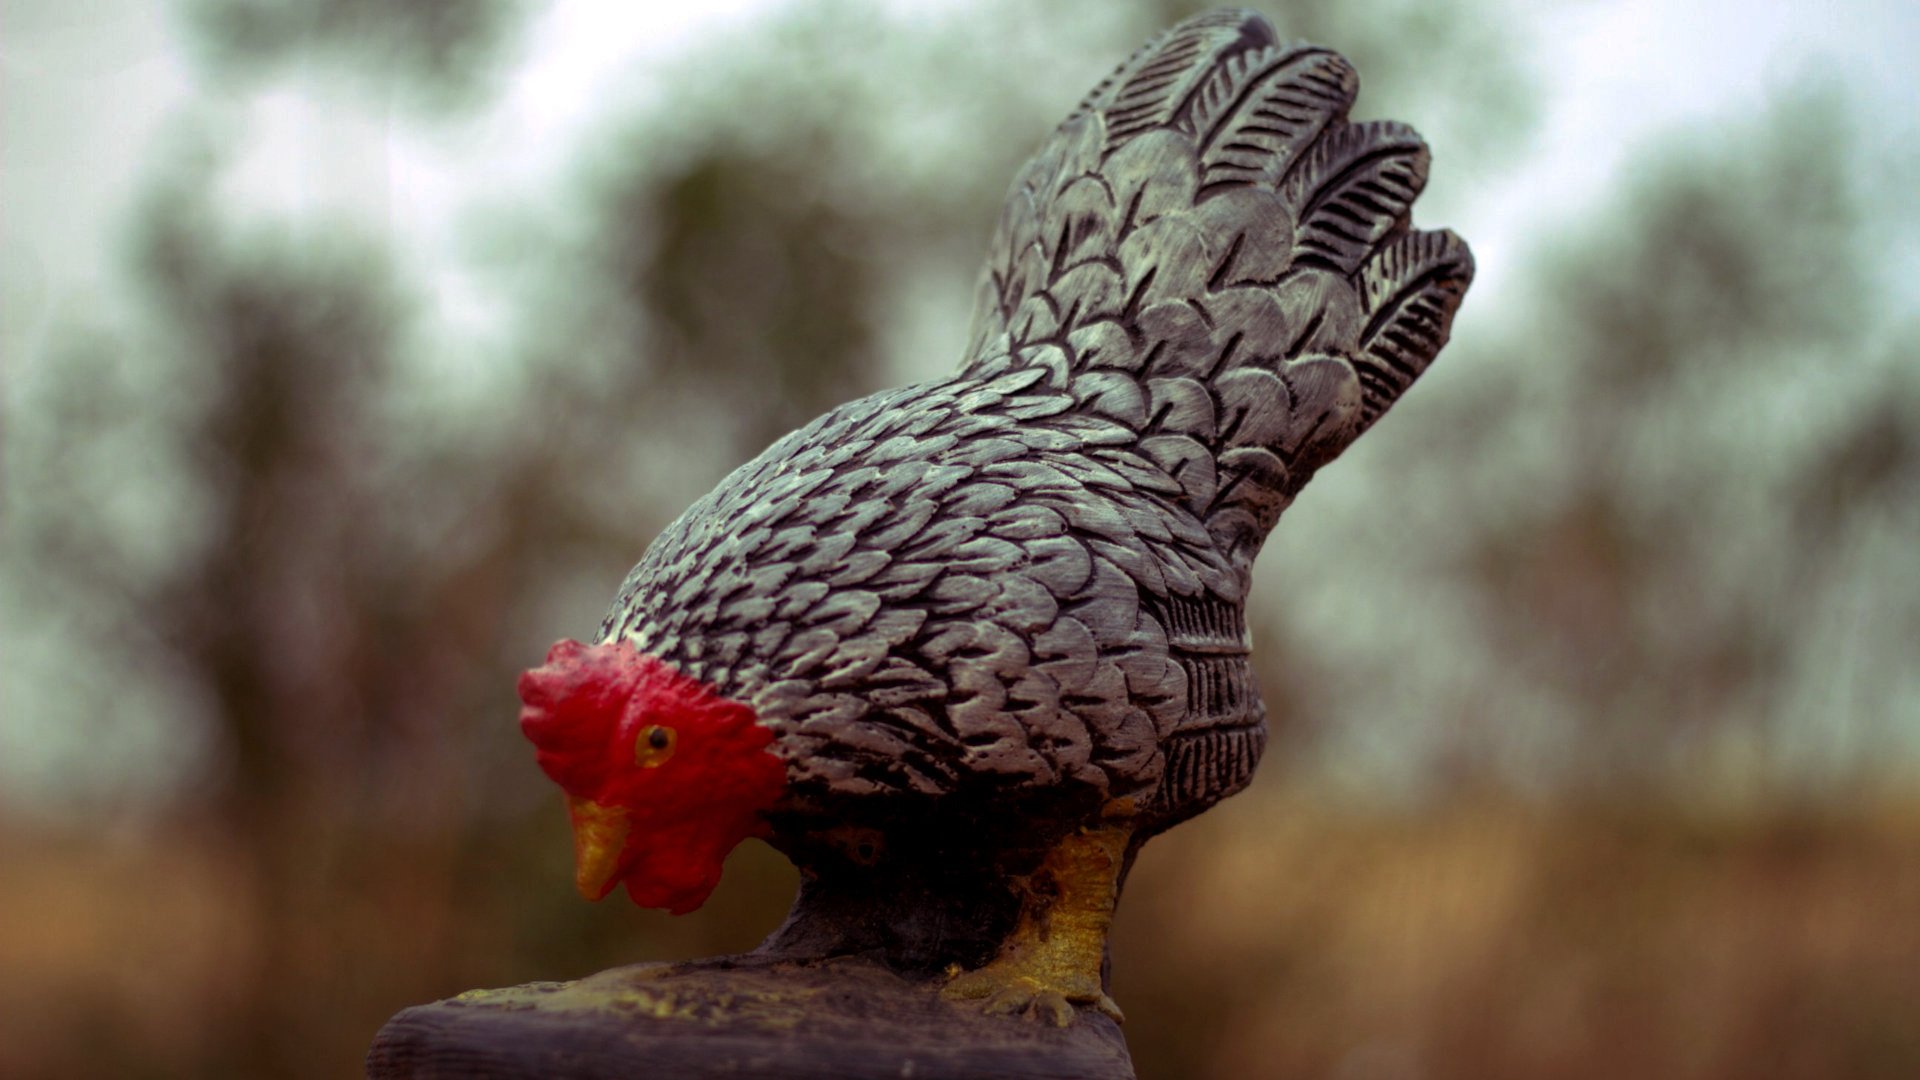 Another sculpture of chicken